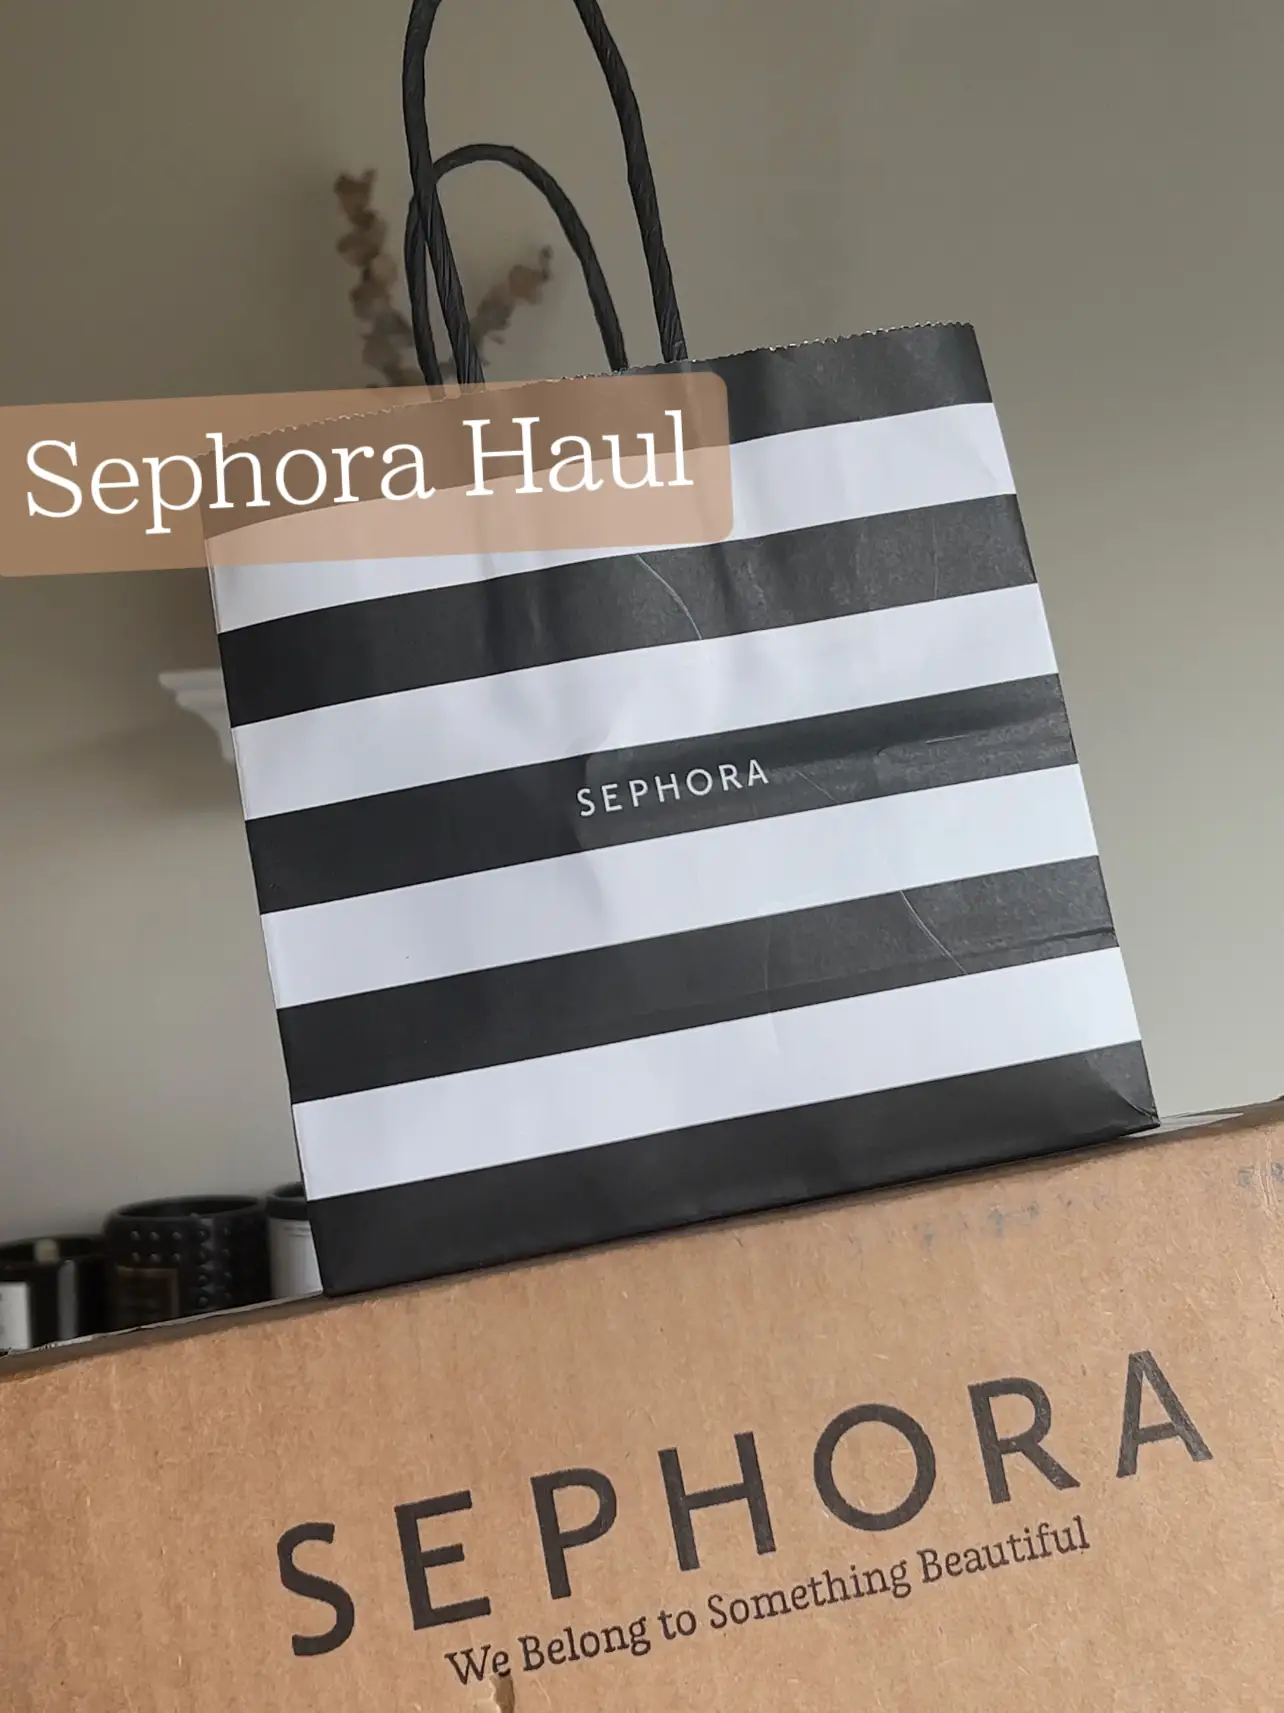 did some damage🤭🩷 #haul #shopping, Sephora Haul